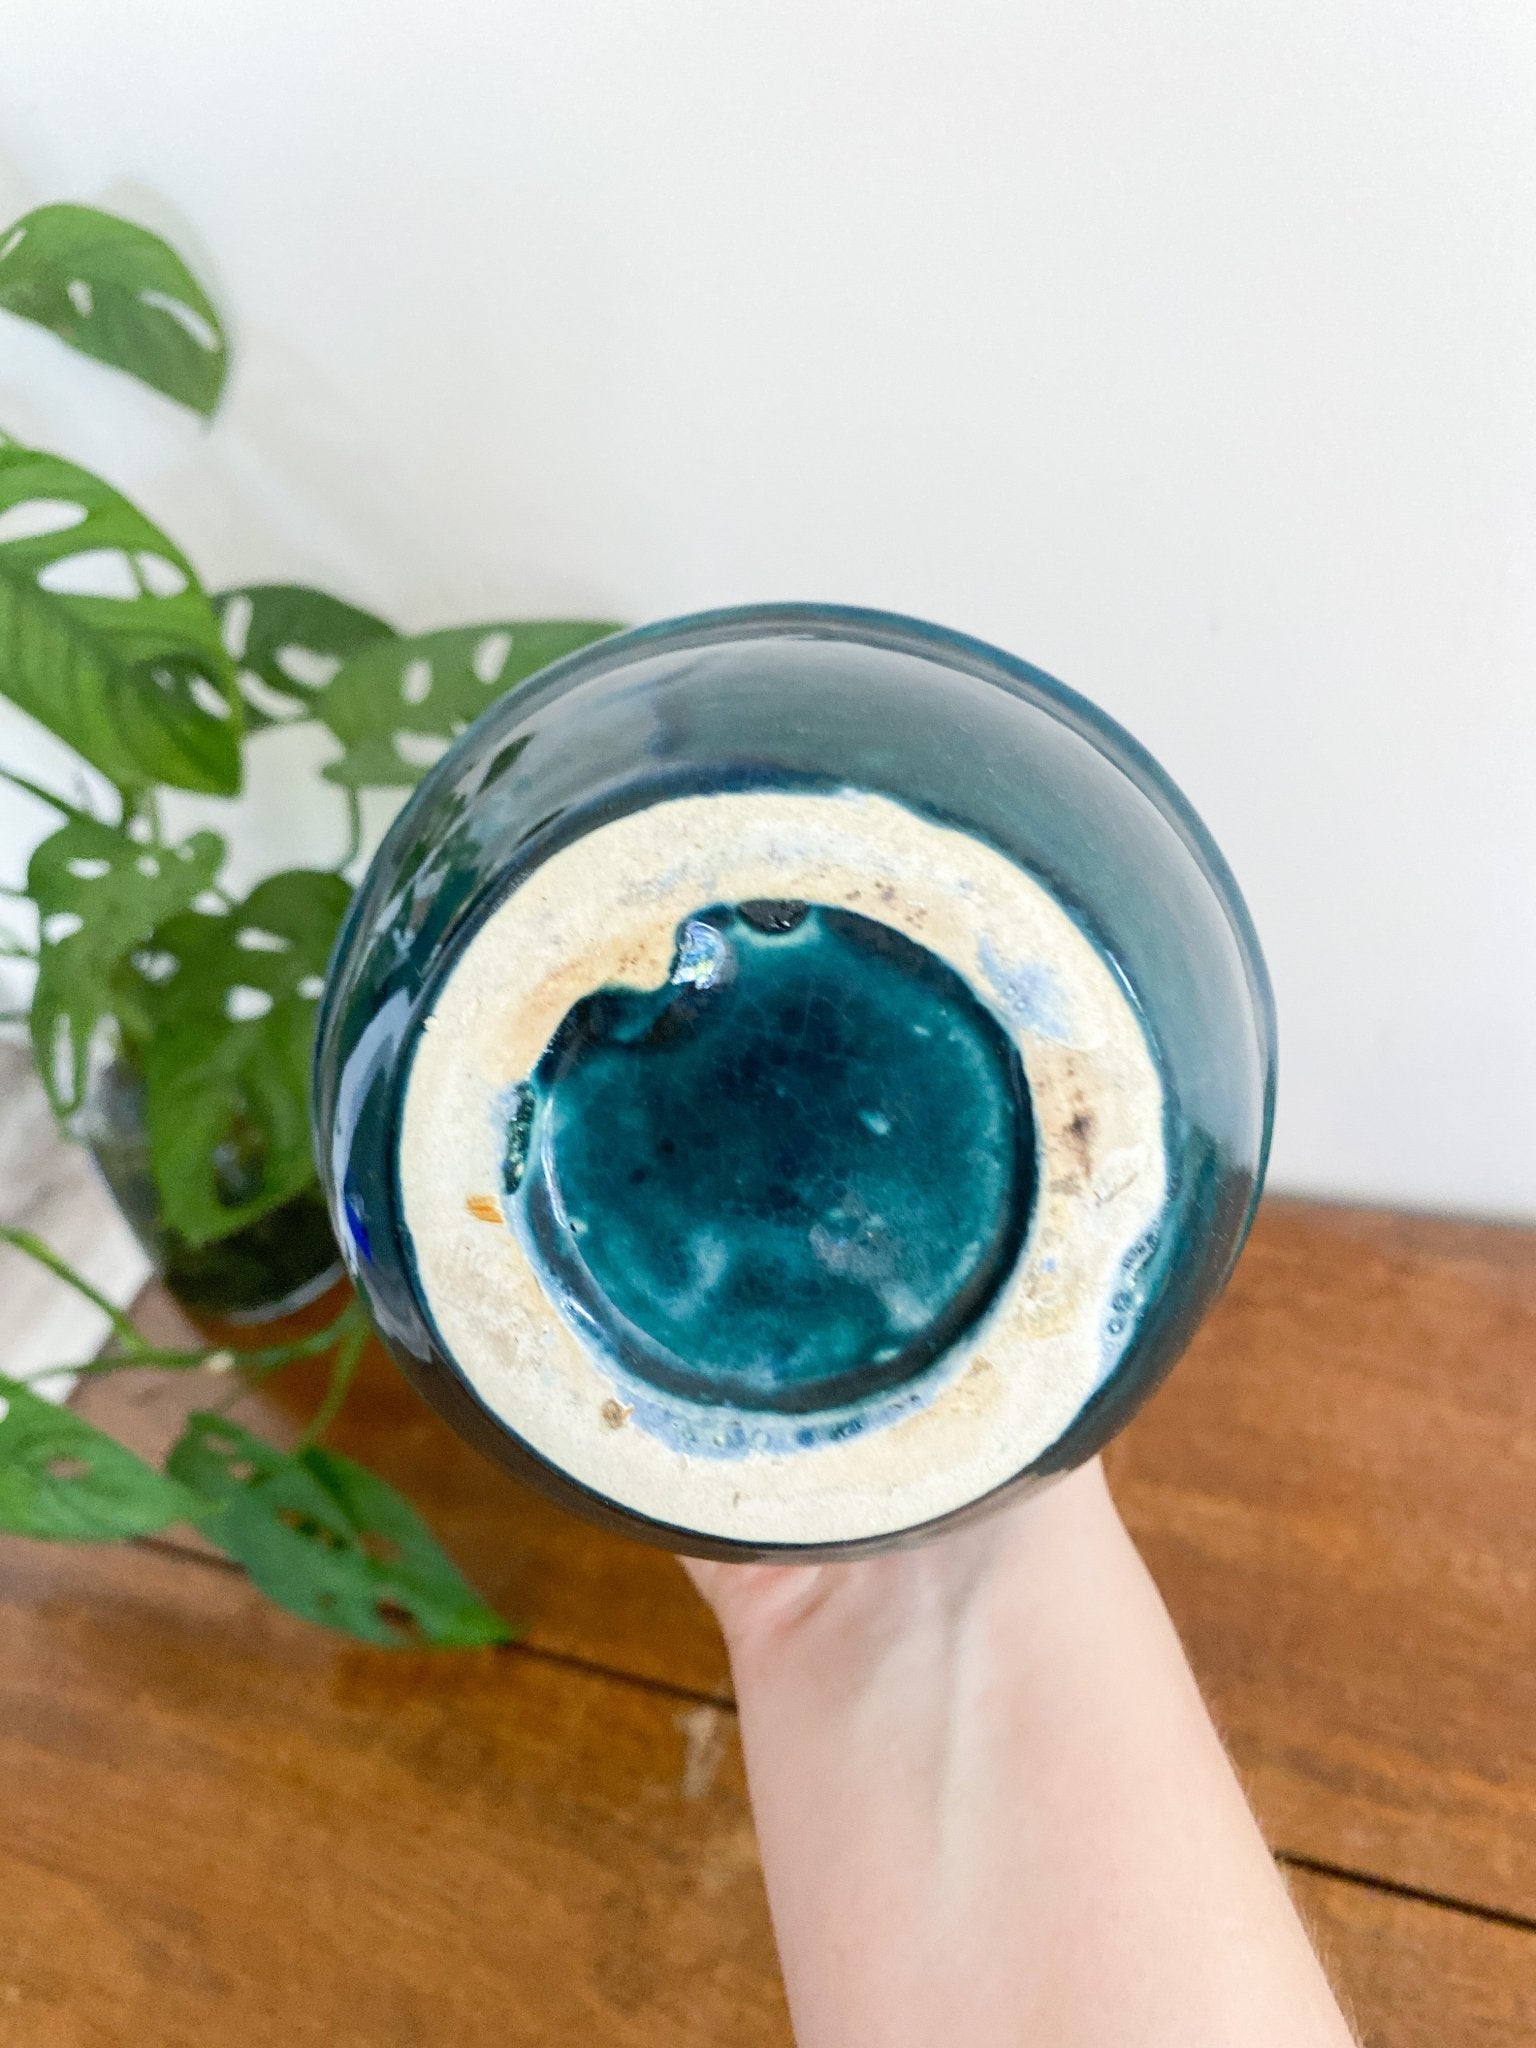 Blue Drip Glaze Vase - Perth Market